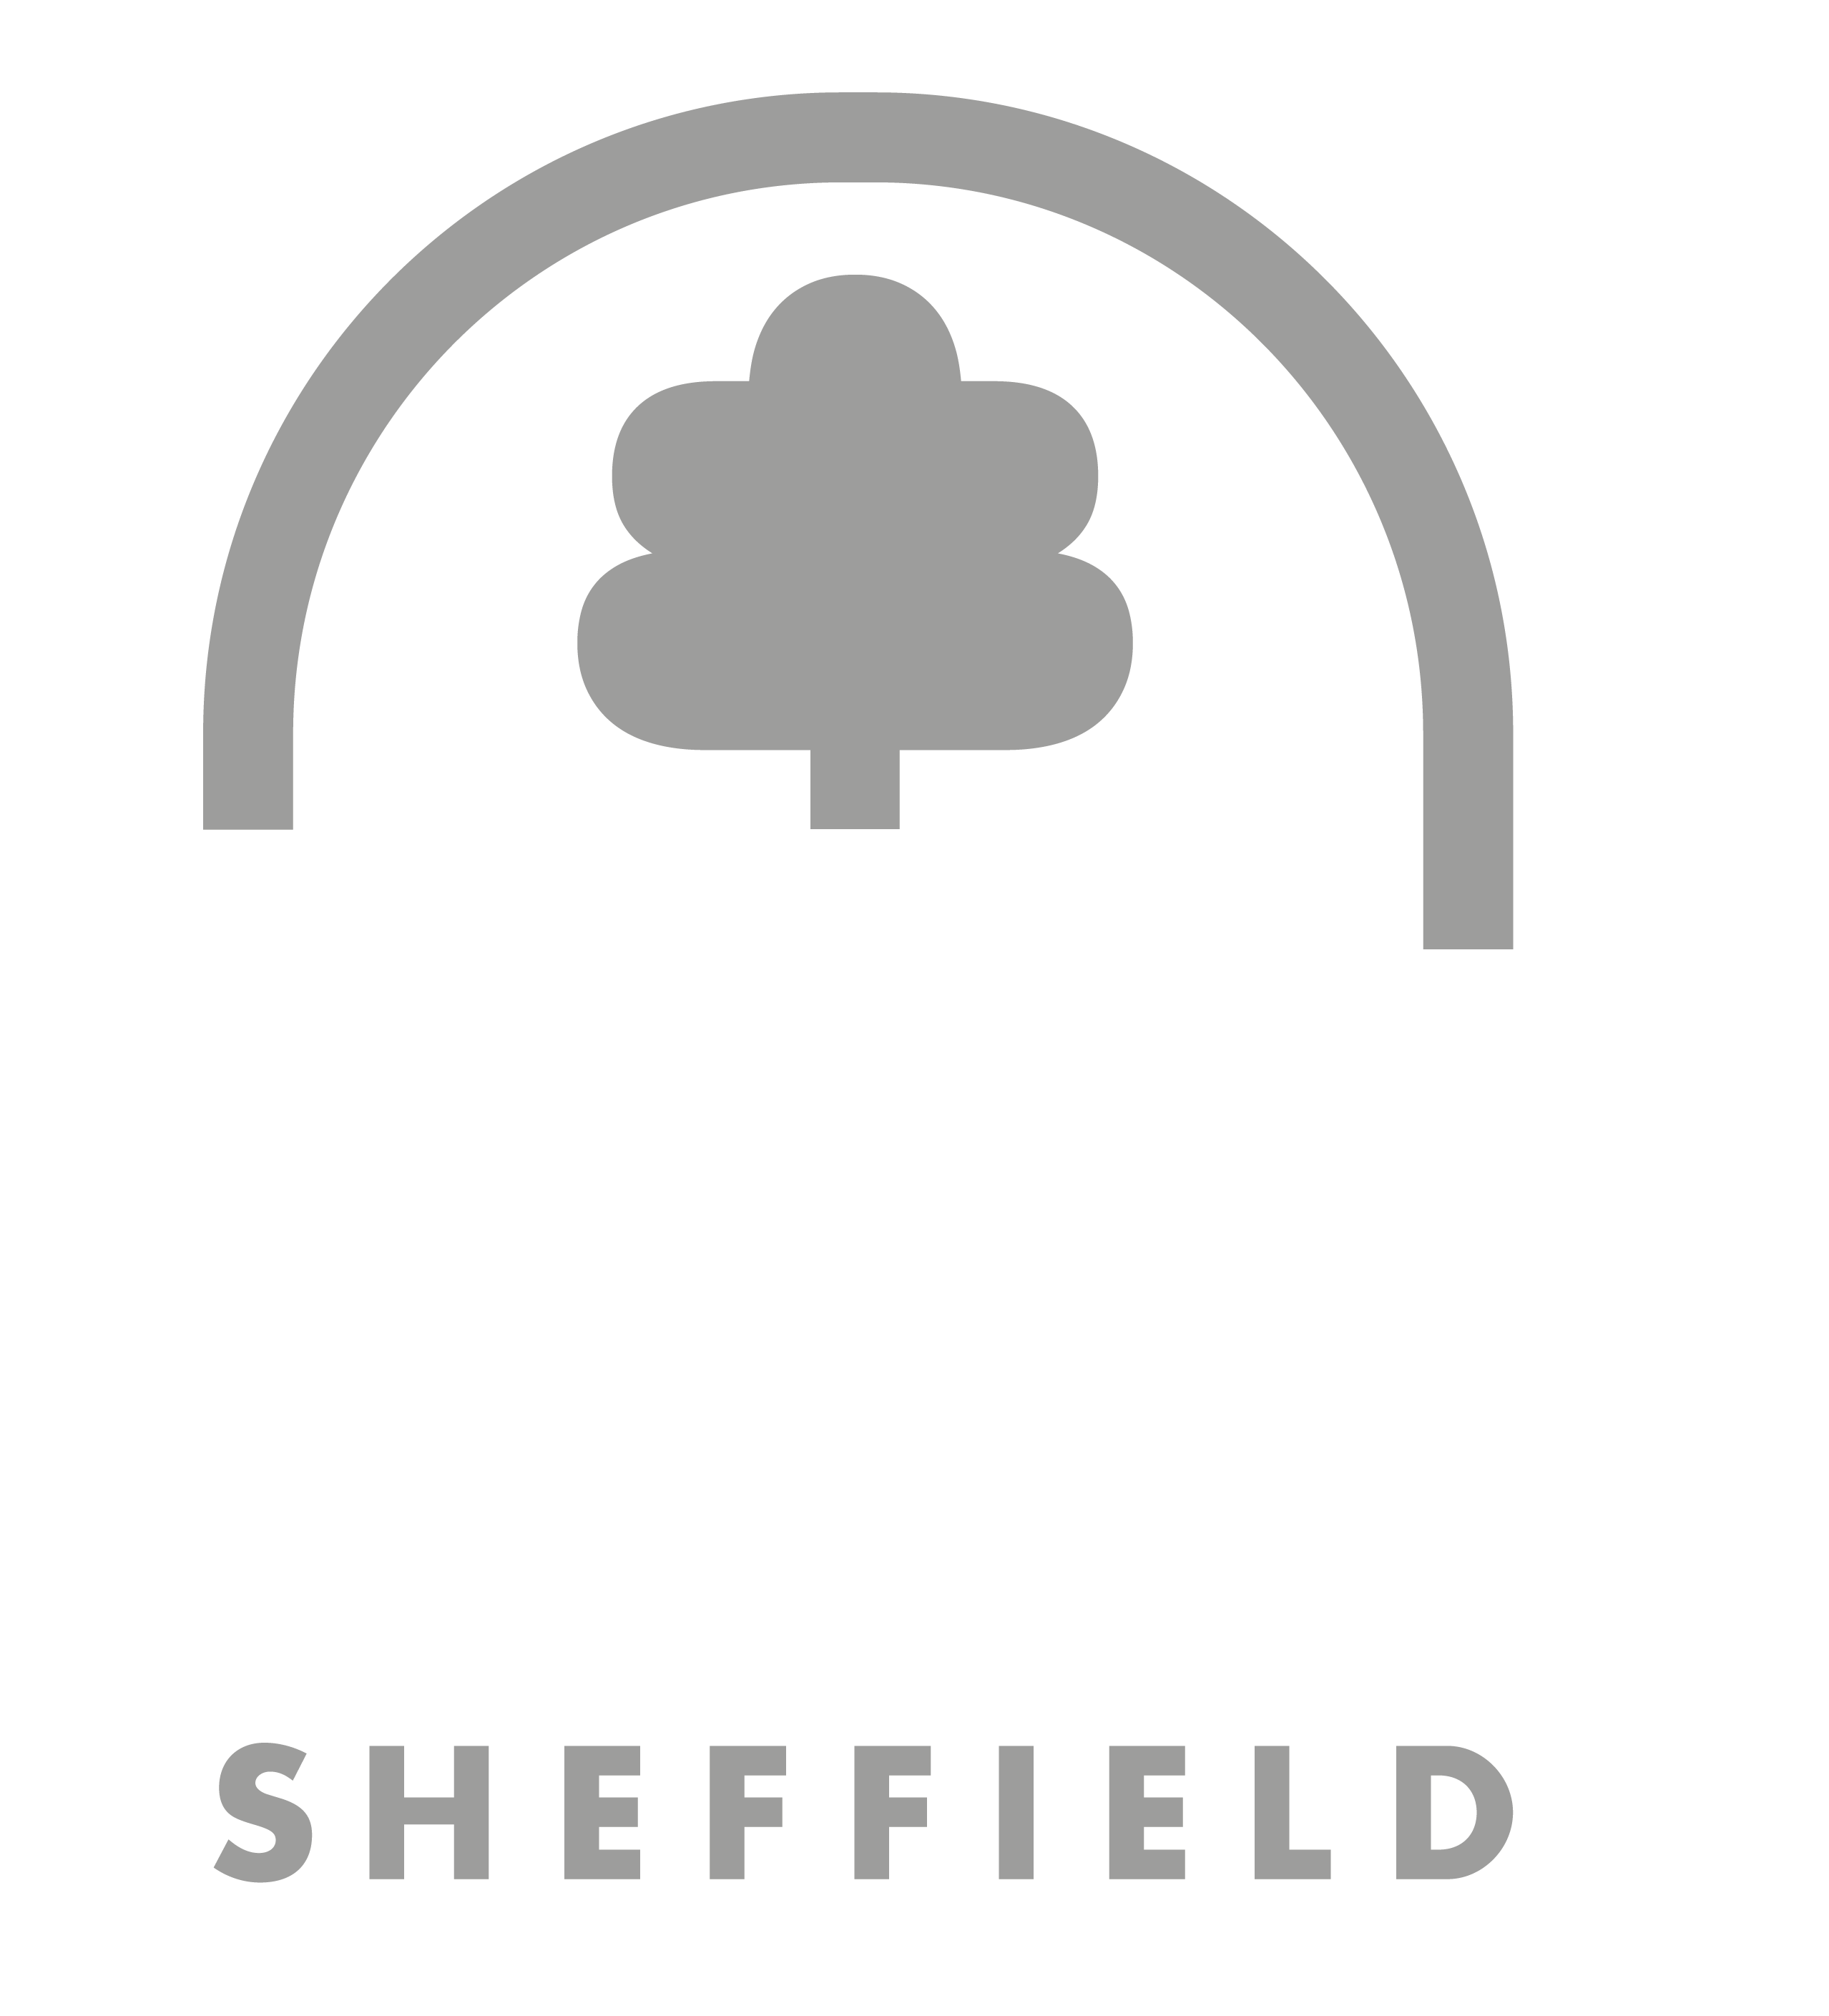 Building Better Parks Sheffield